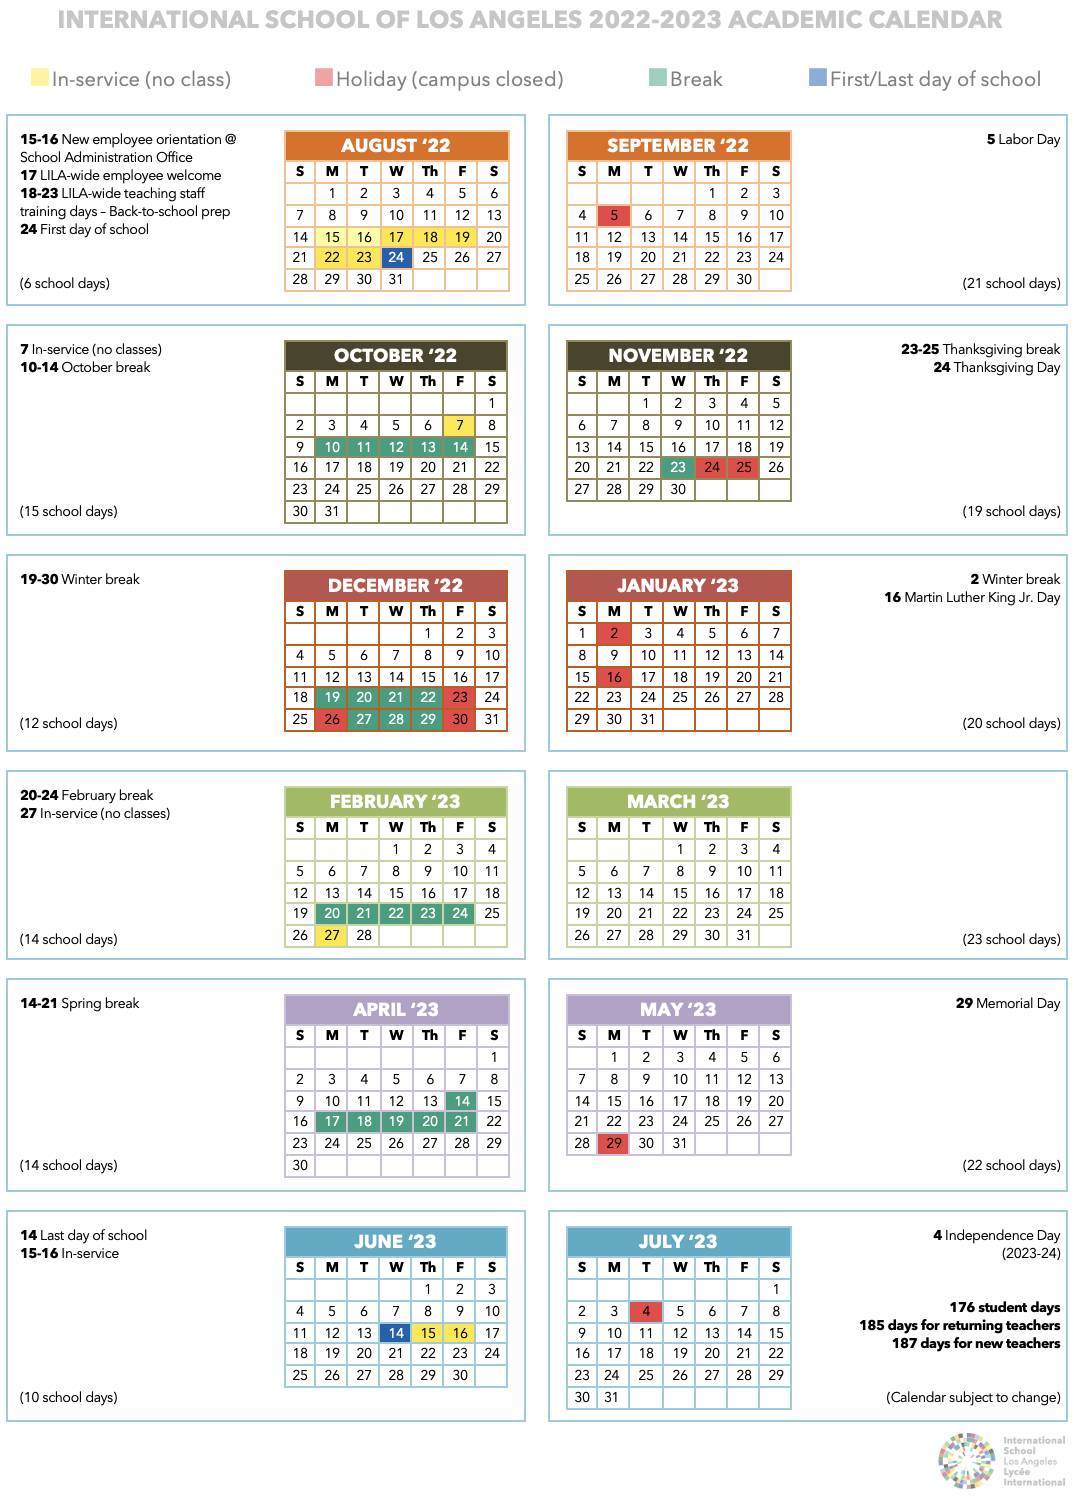 Uc Irvine Academic Calendar 2022 23 Calendar | International School Of Los Angeles